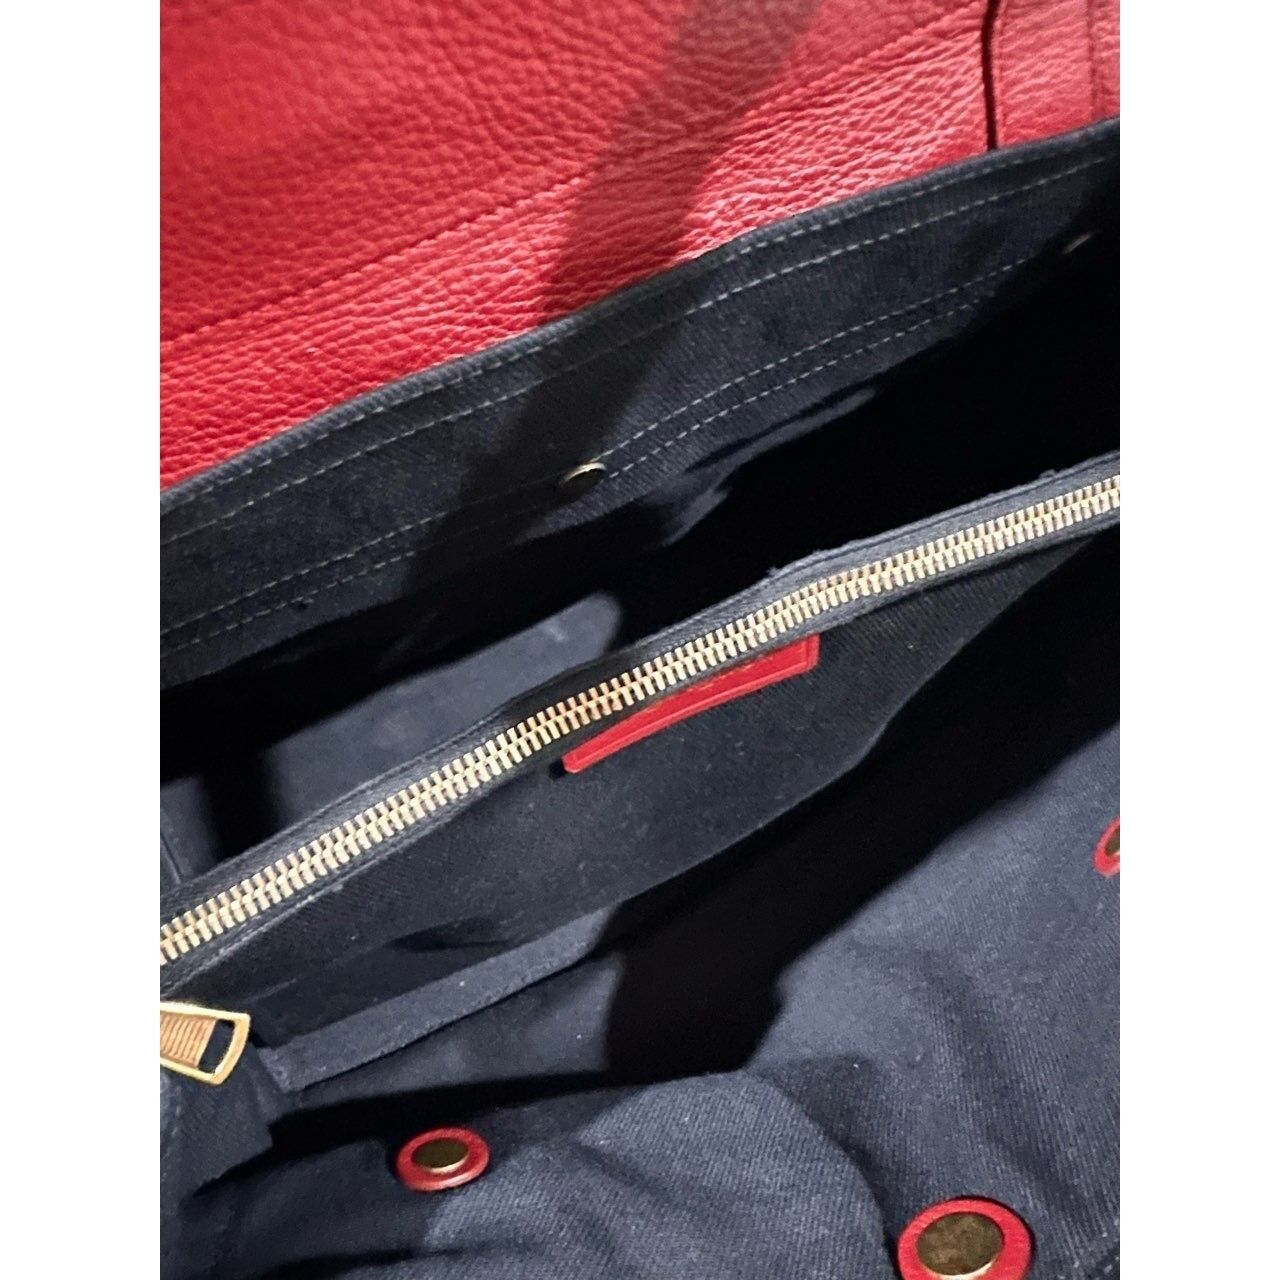 Yves Saint Laurent Red Tote Bag